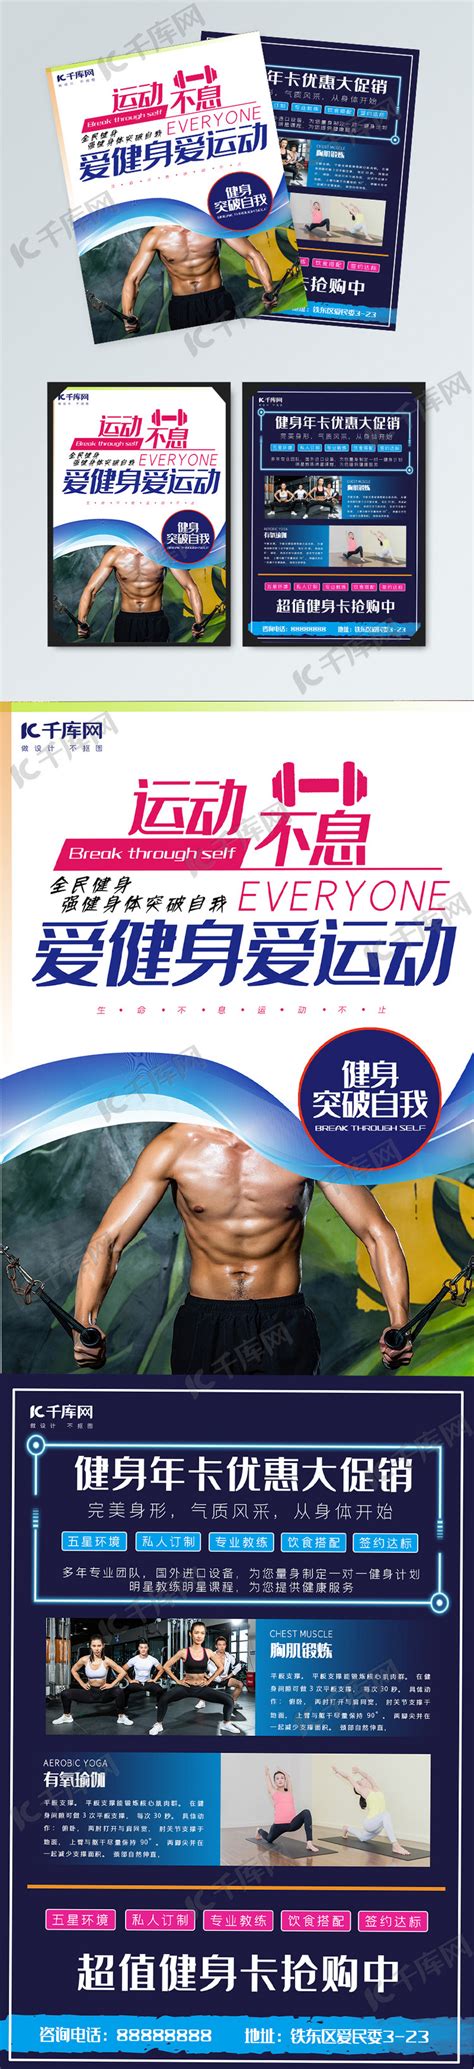 《Running Man》成员金钟国是健身达人 分享自己的健身餐单-新闻资讯-高贝娱乐